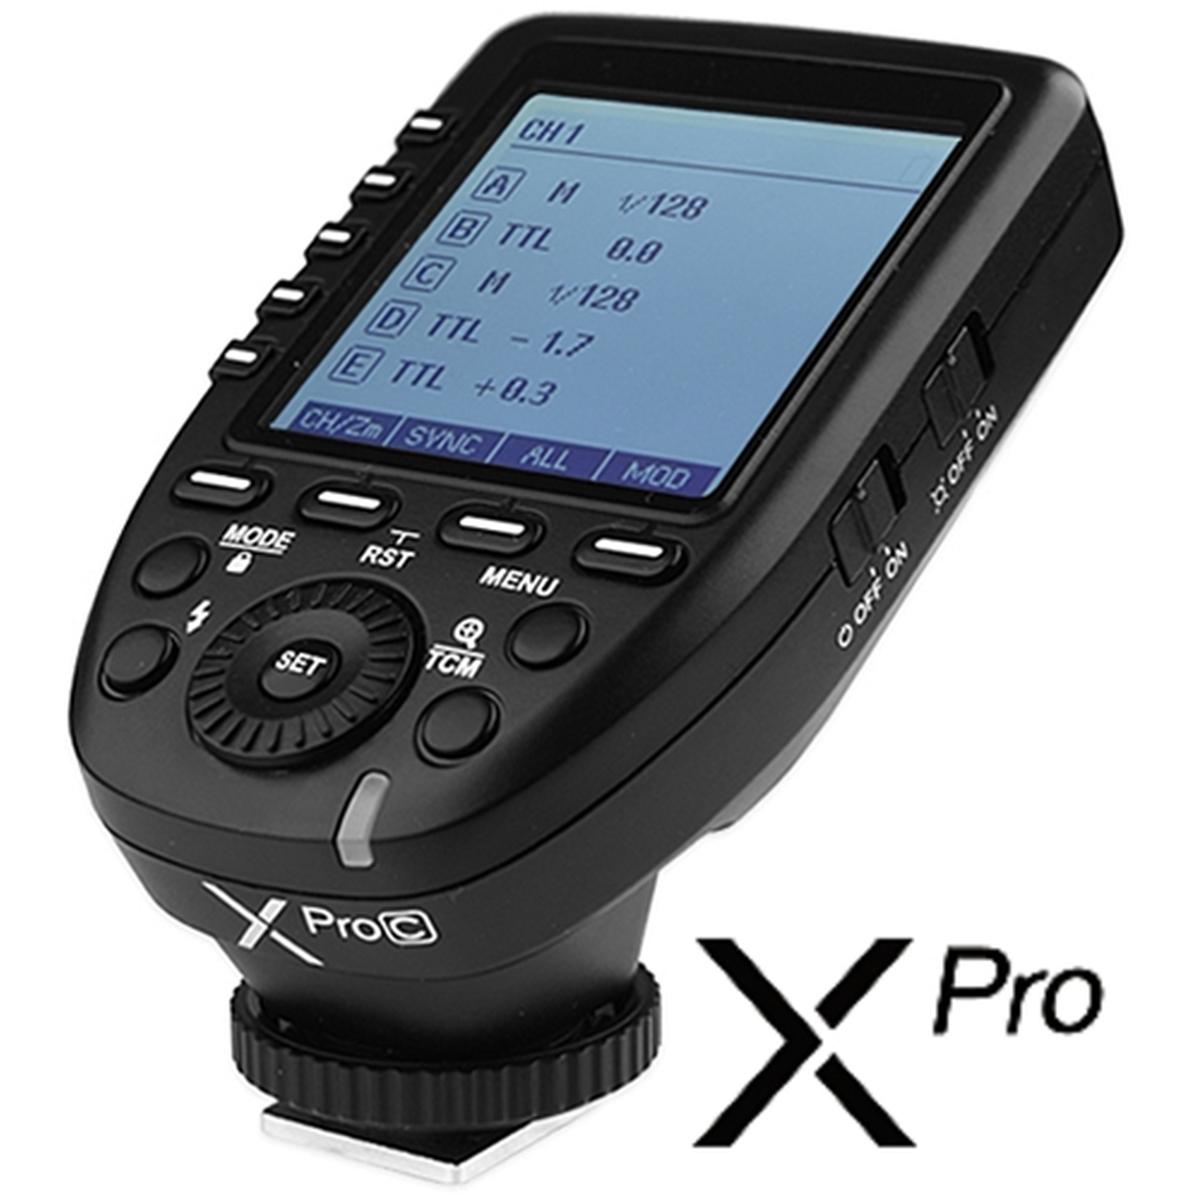 Trasmettitore Godox Xpro-P Ttl Pentax-Trigger- radiocomando